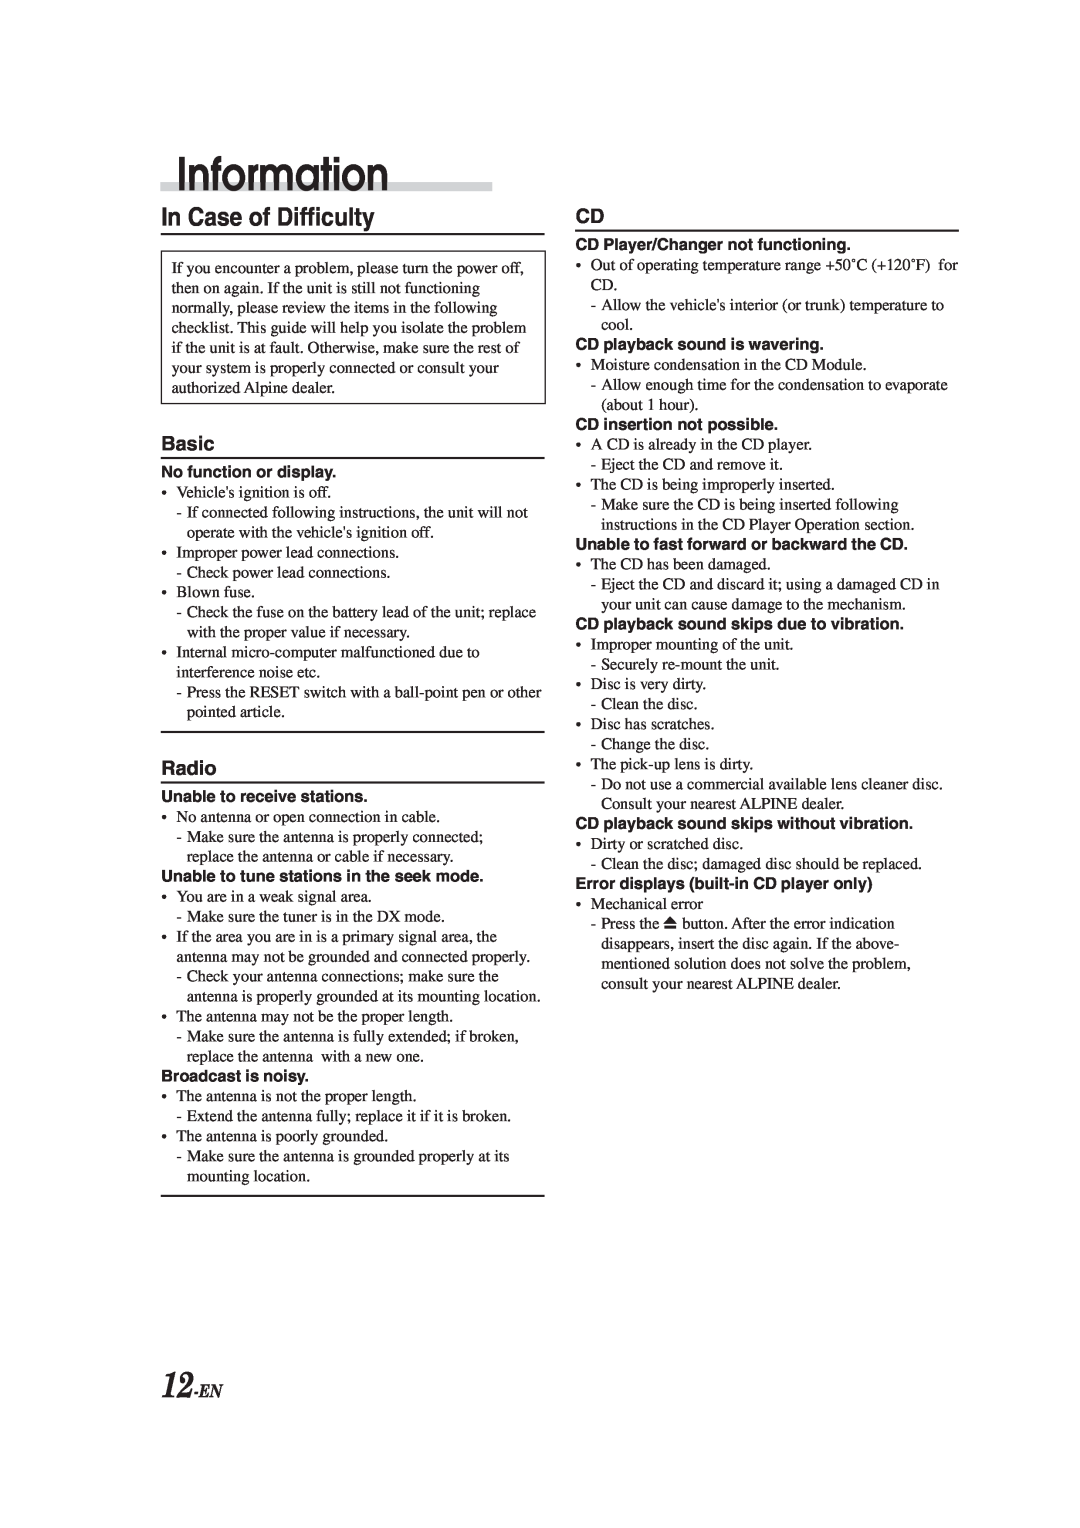 Alpine CDM-9823, cdm-9821 owner manual Information, In Case of Difficulty, Basic, Radio, 12-EN 